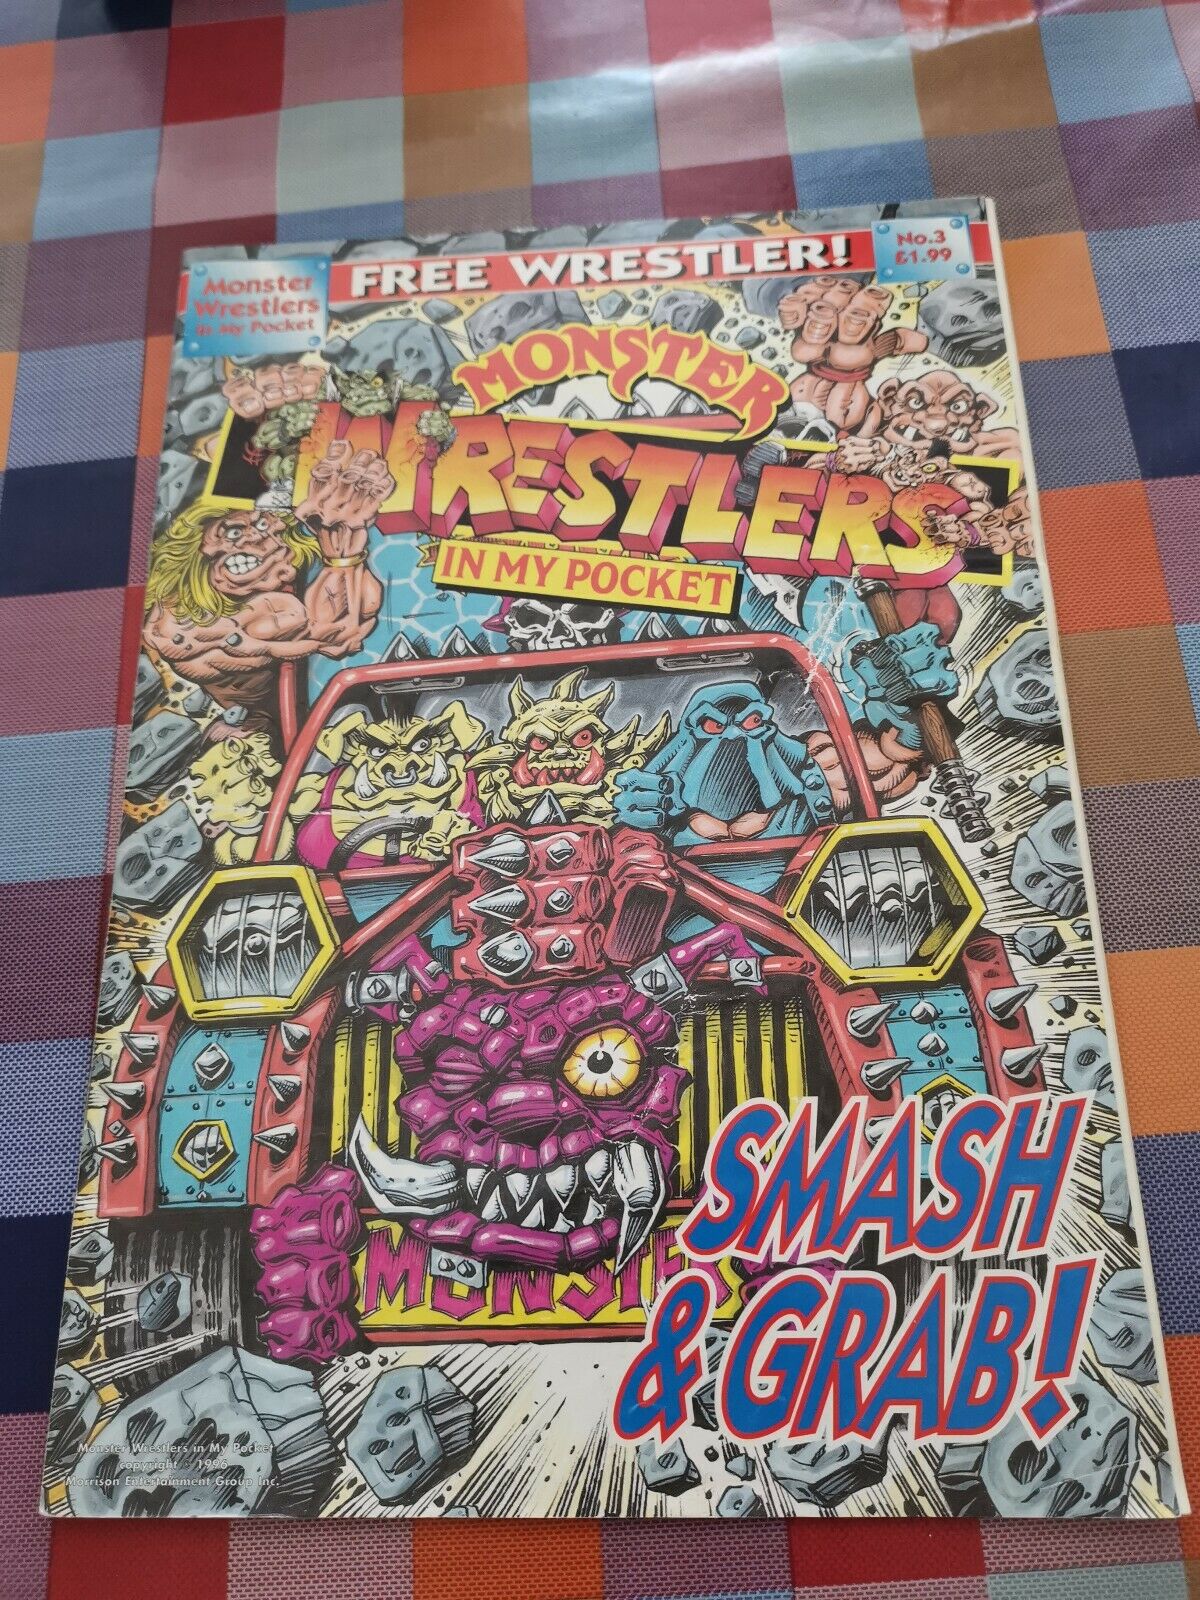 Boys Adventure Comics: Monster Wrestlers in my pocket #3